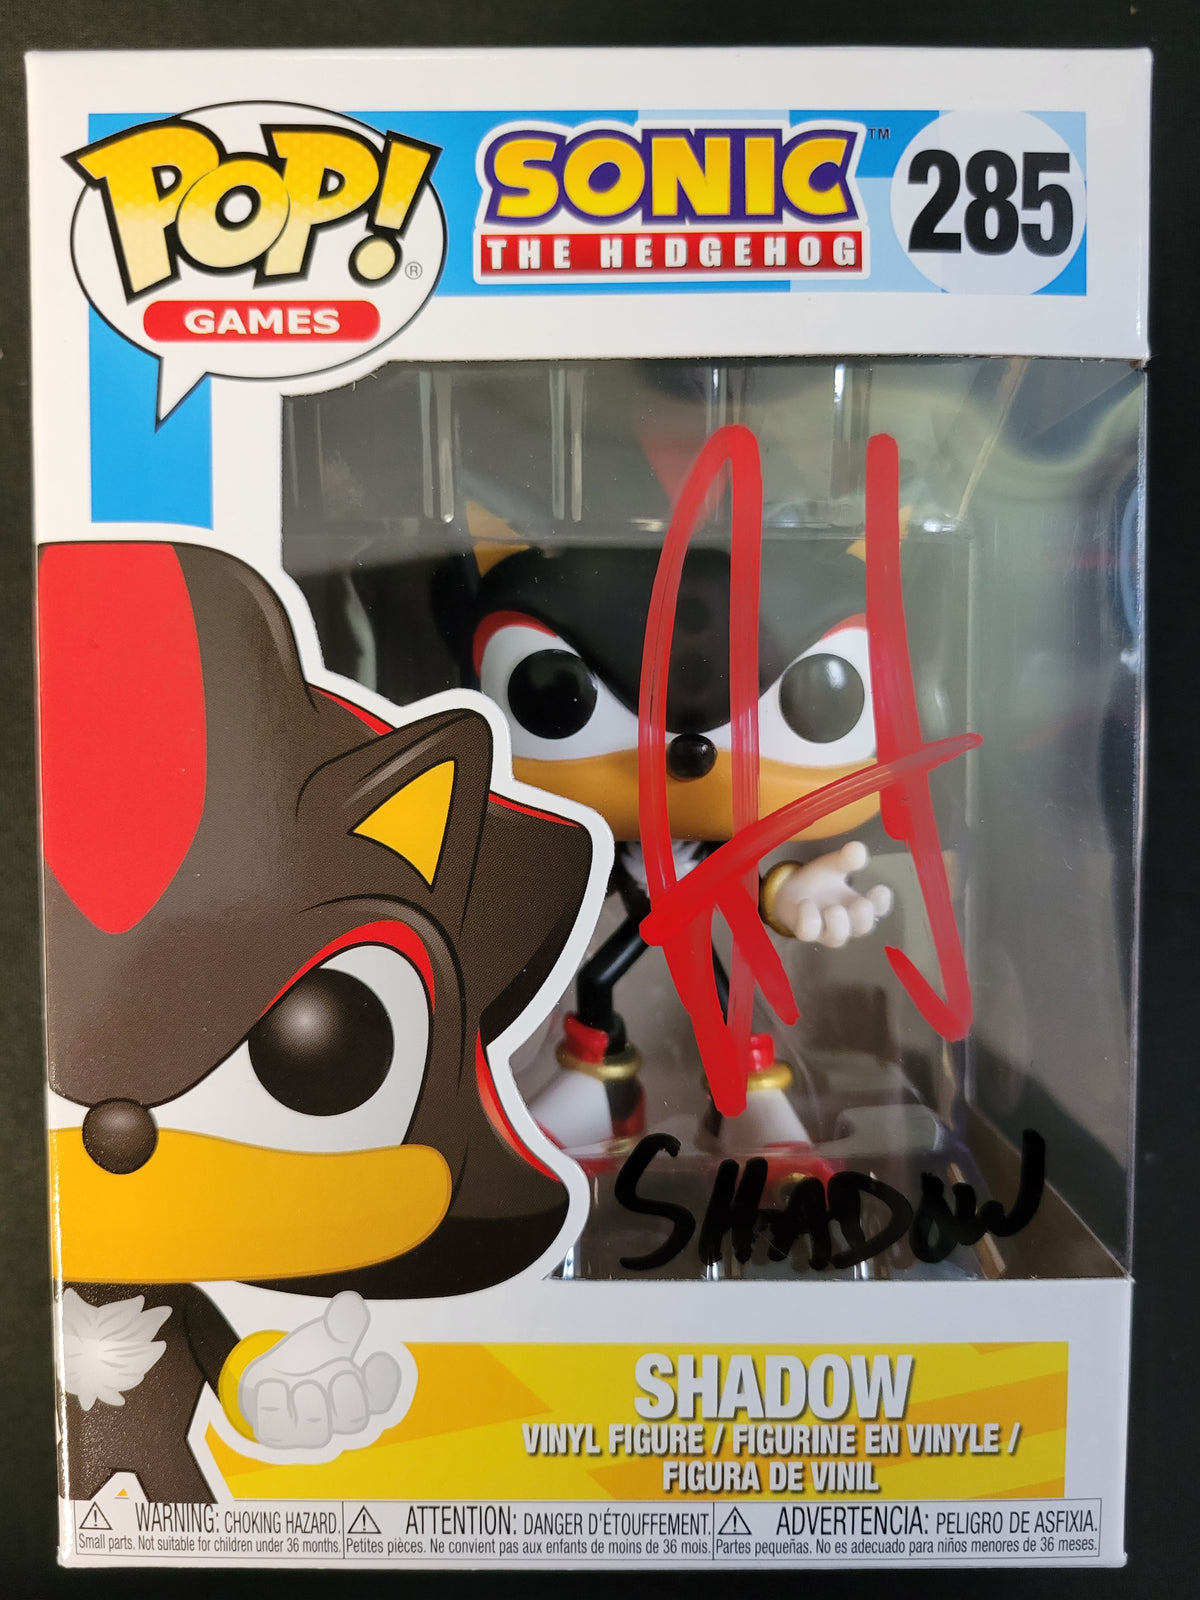 Funko Pop: Shadow The Hedgehog #285 Autographed by Jason Griffith - Cert 704